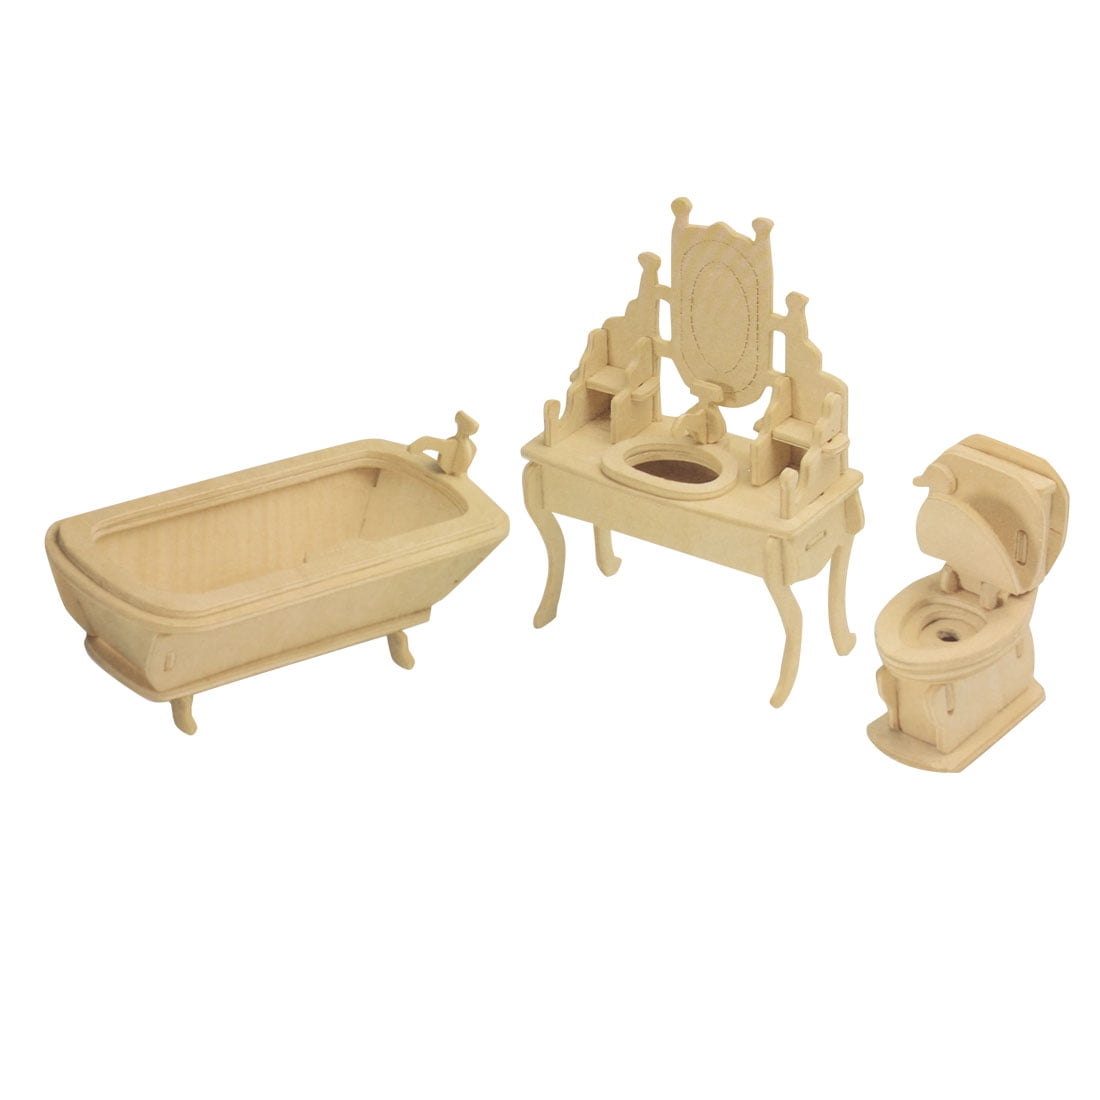 3d Puzzle Bathroom Table Bathtub Model Wooden Construction